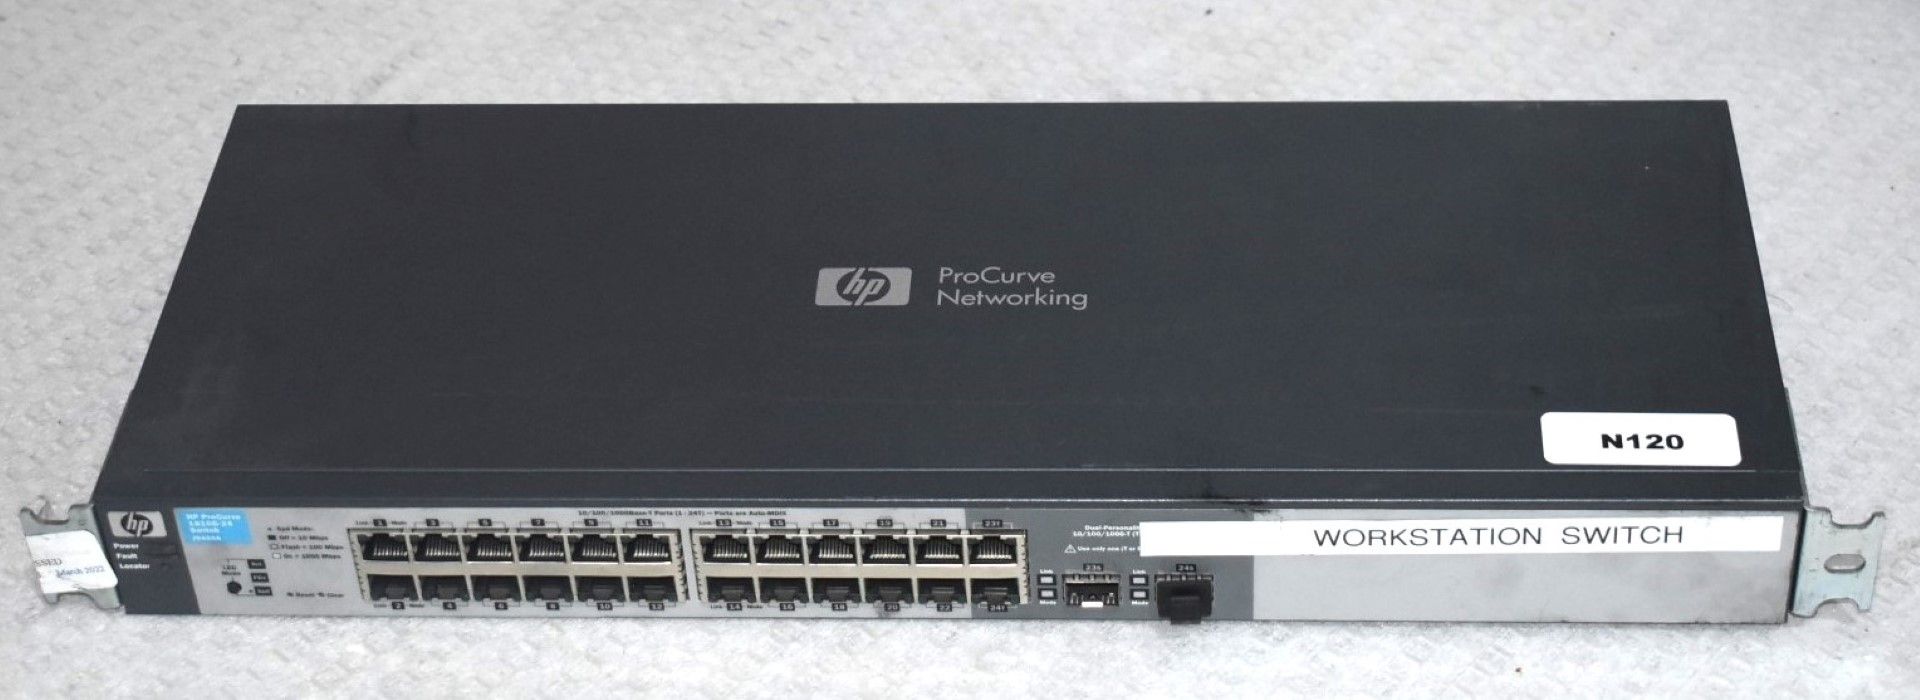 1 x HP Procurve 1810G 24 Port J9450A Switch